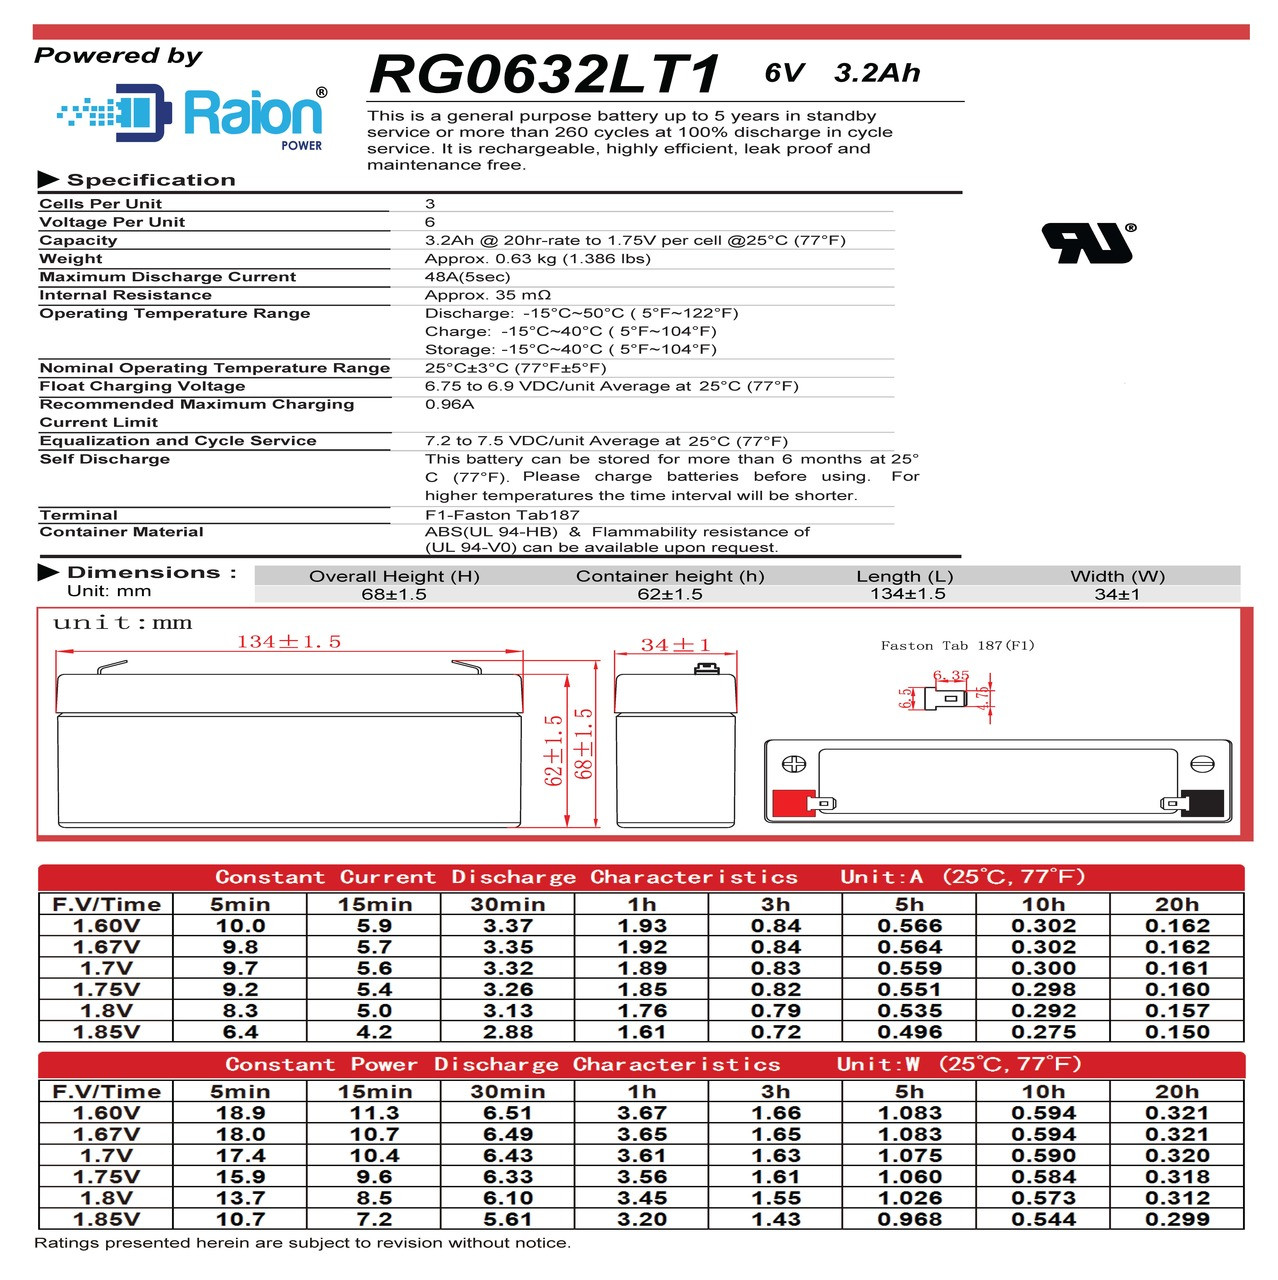 Raion Power RG0632LT1 6V 3.2Ah Battery Data Sheet for MATRIX NP3.2-6